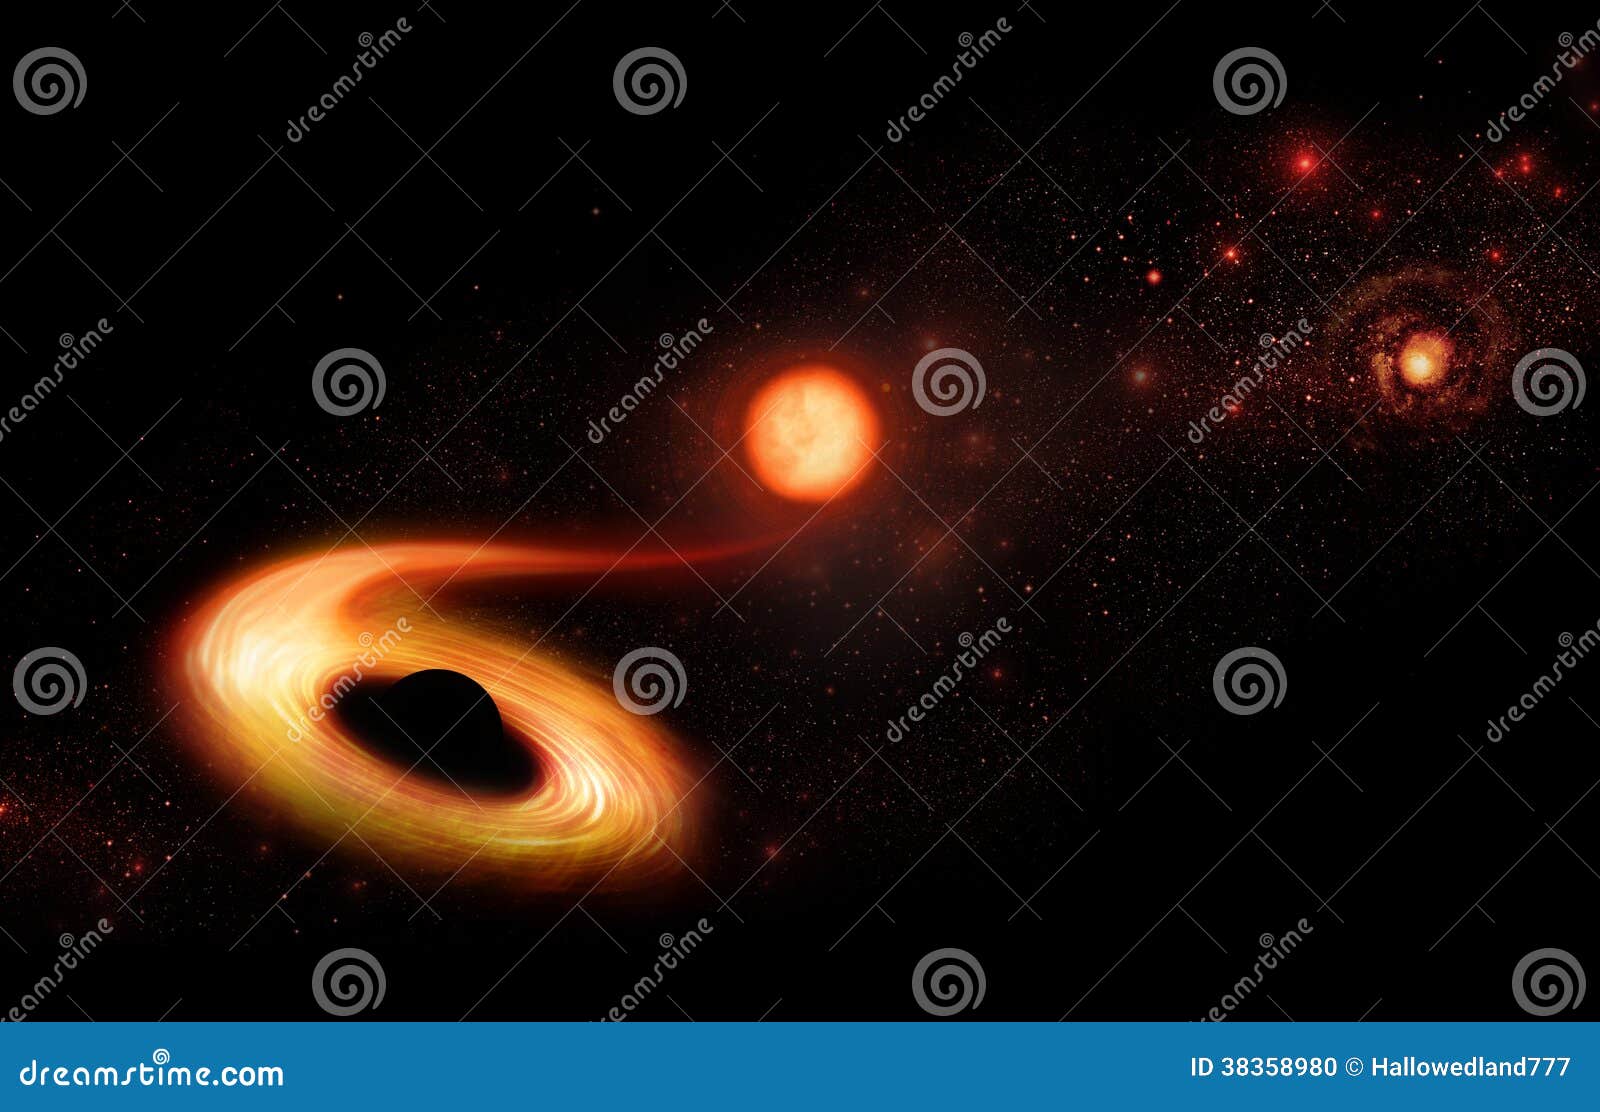 black hole eats the star